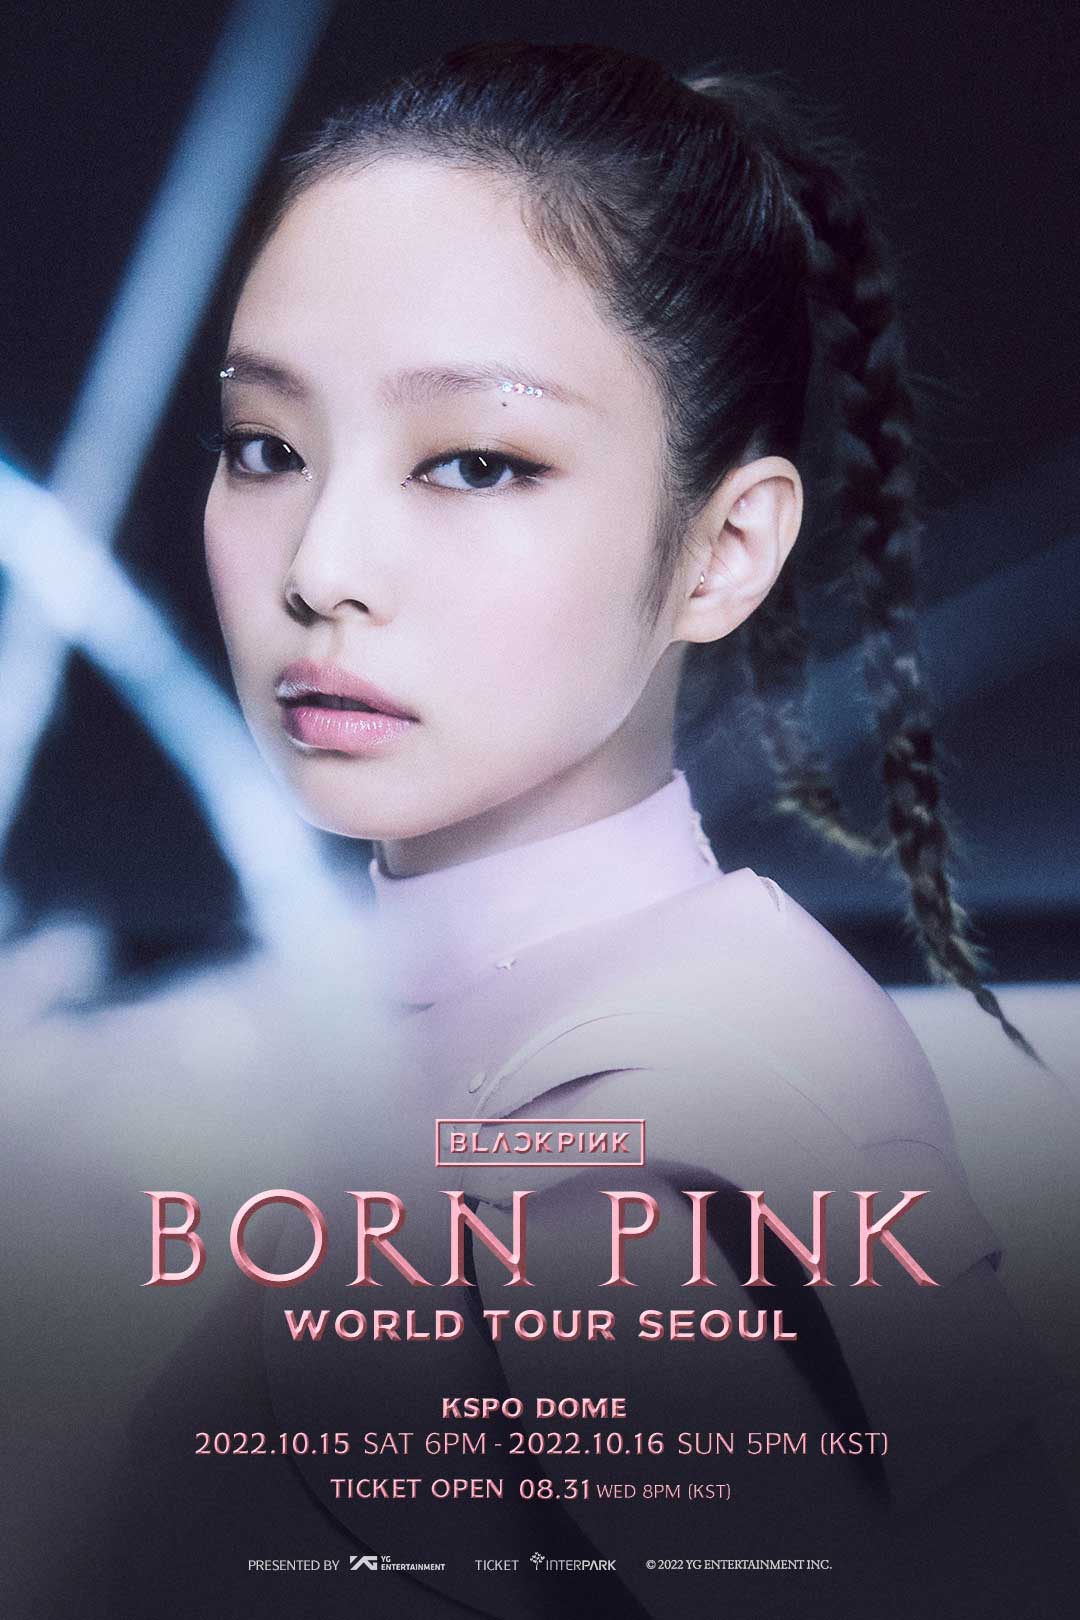 World tour born pink seoul jennie v02.jpg